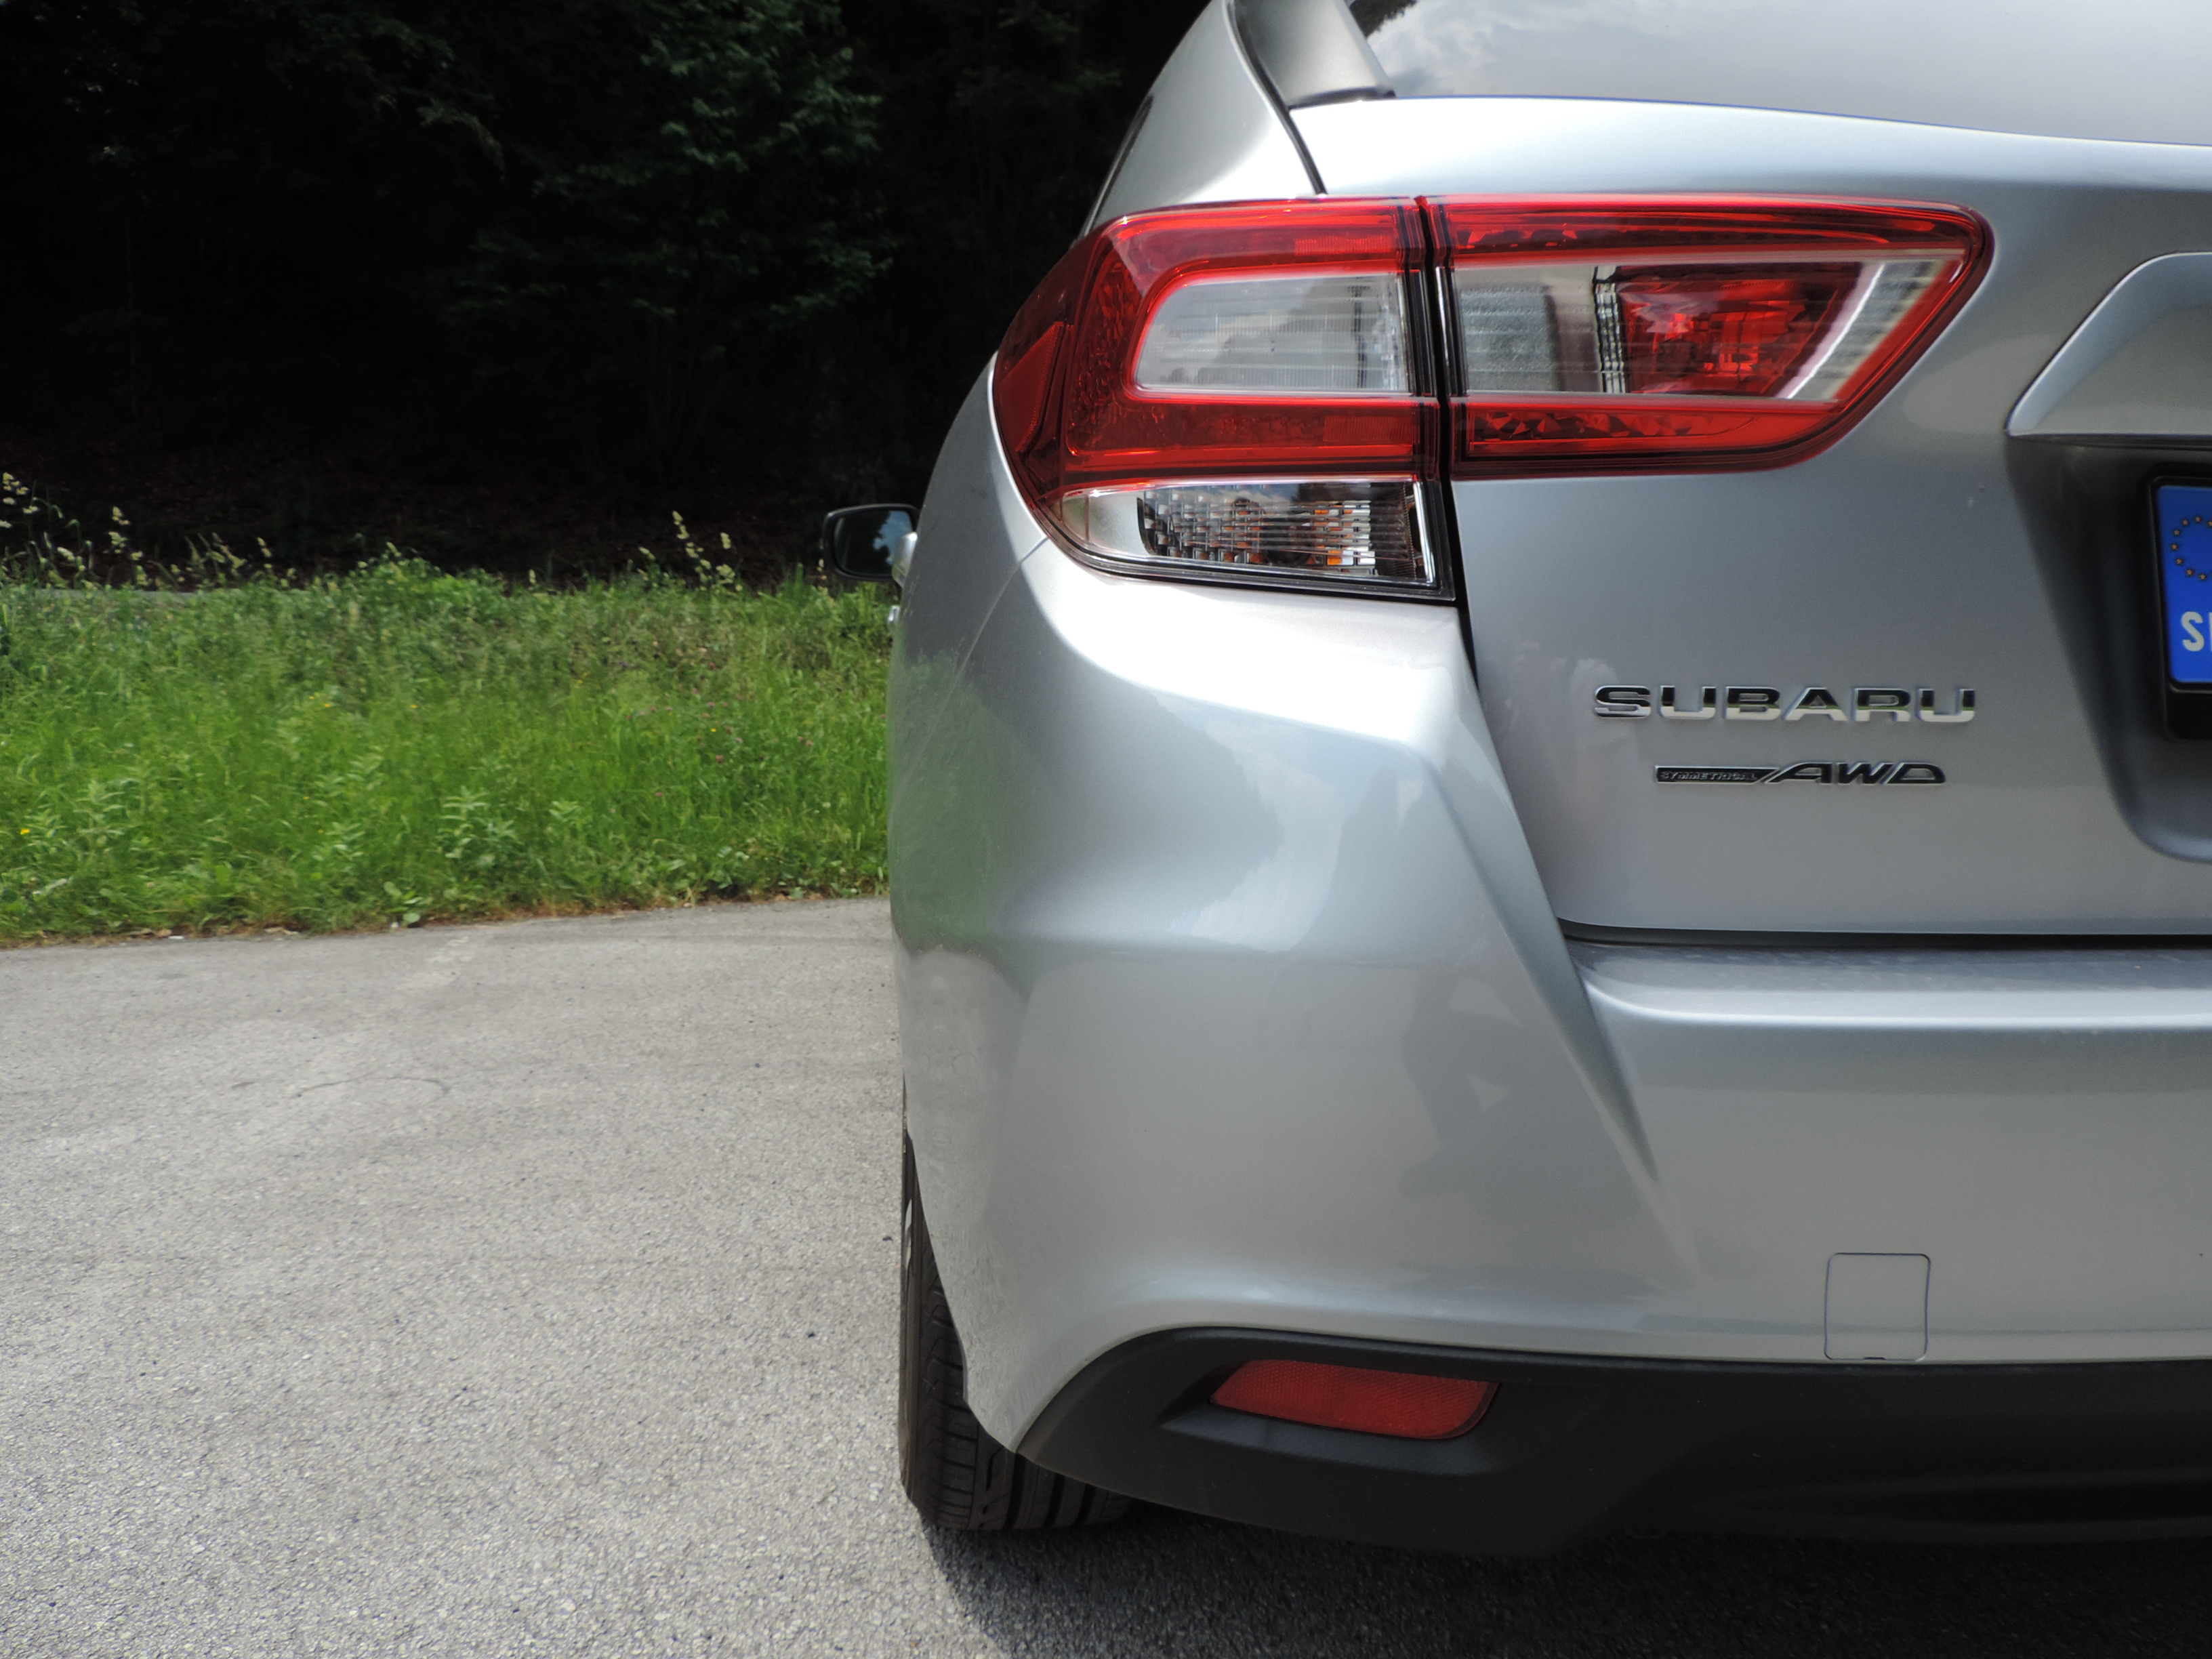 Subaru Impreza 2018 test - zadné svetlo a plaketa simmetrical awd